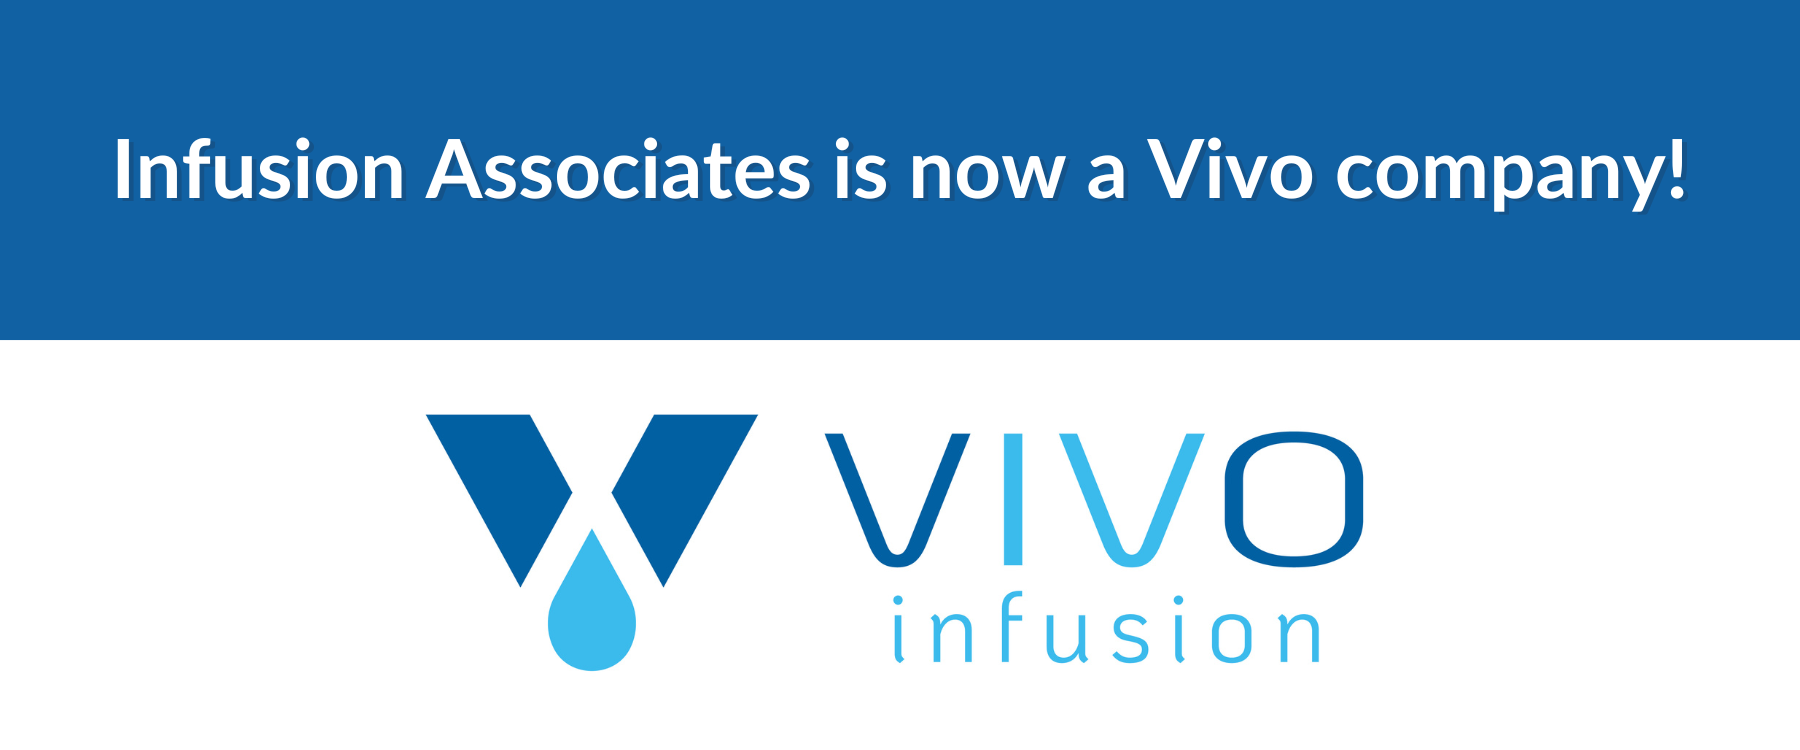 Infusion Associates is now a Vivo company!